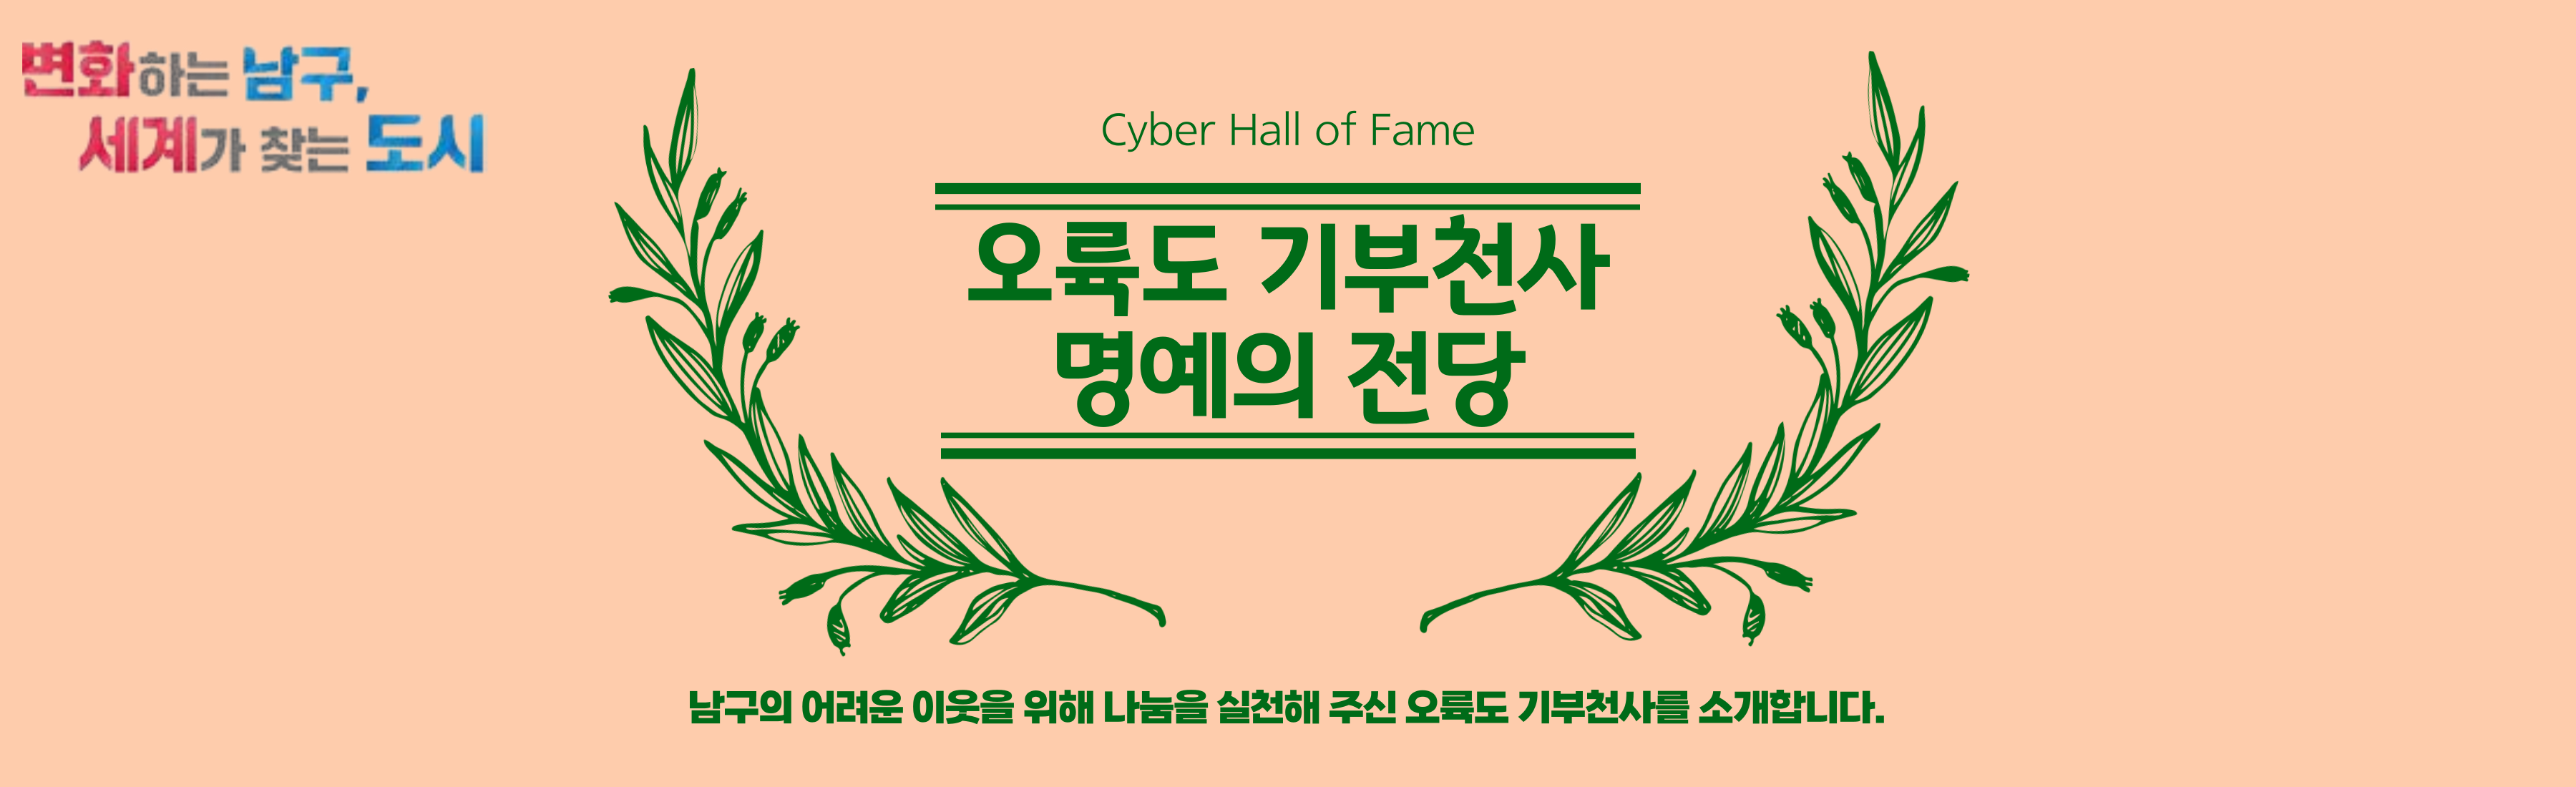 Cyber Hall of Fame 오륙도 기부천사 명예의 전당 남구의 어려운 이웃을 위해 나눔을 실천해 주신 오륙도 기부천사를 소개합니다.